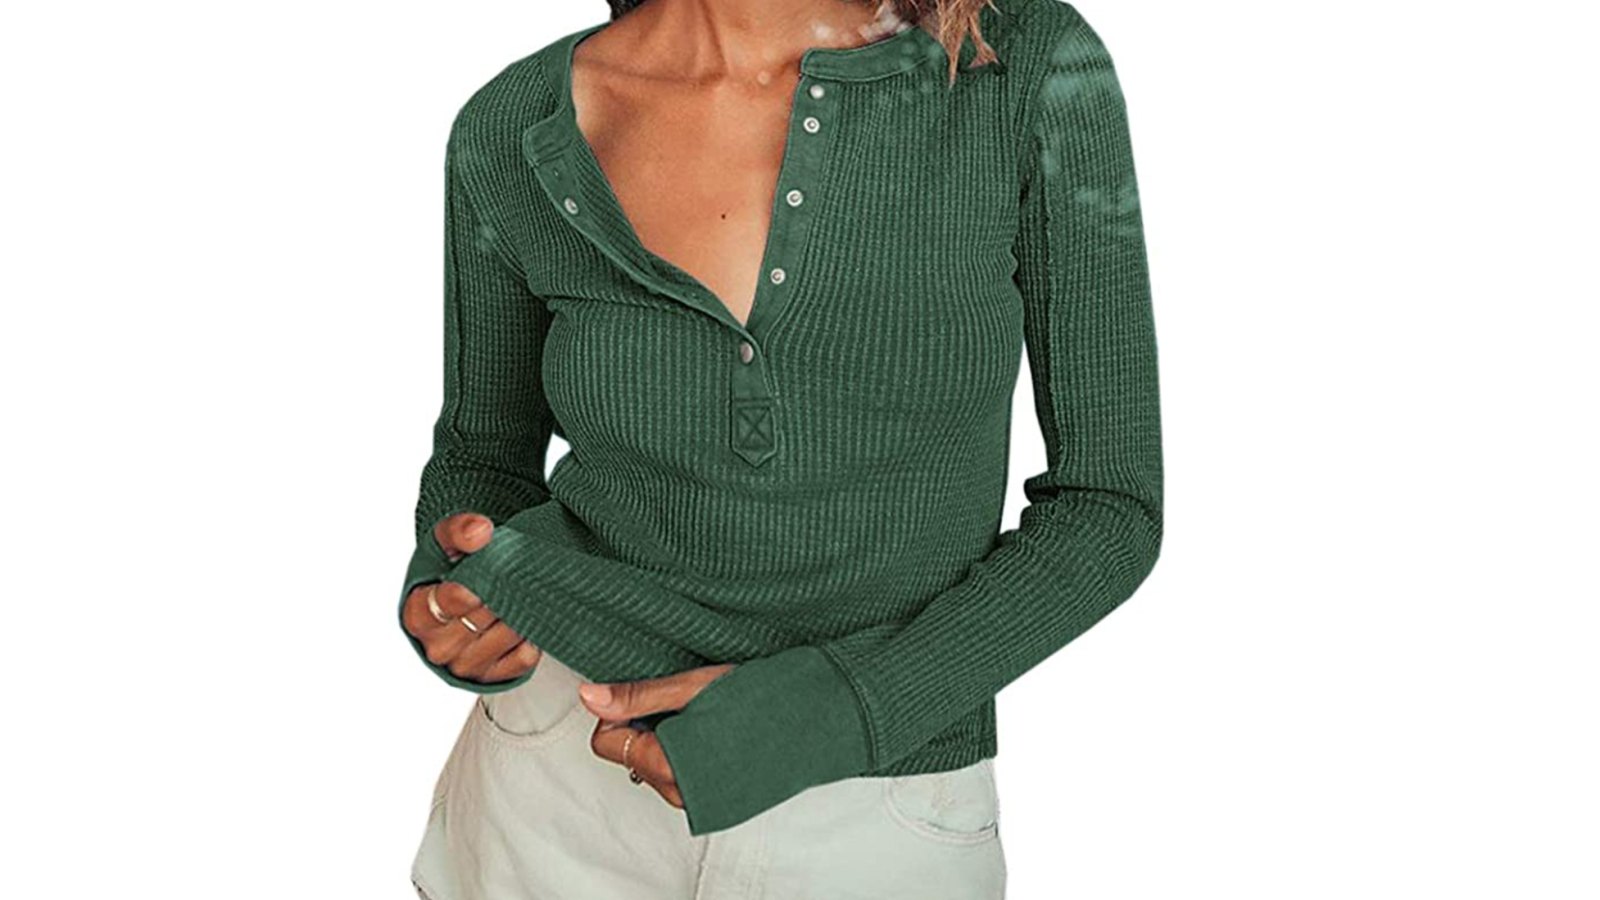 Dellytop Women's Long Sleeve Button Down Henley Warm Waffle Knit Top